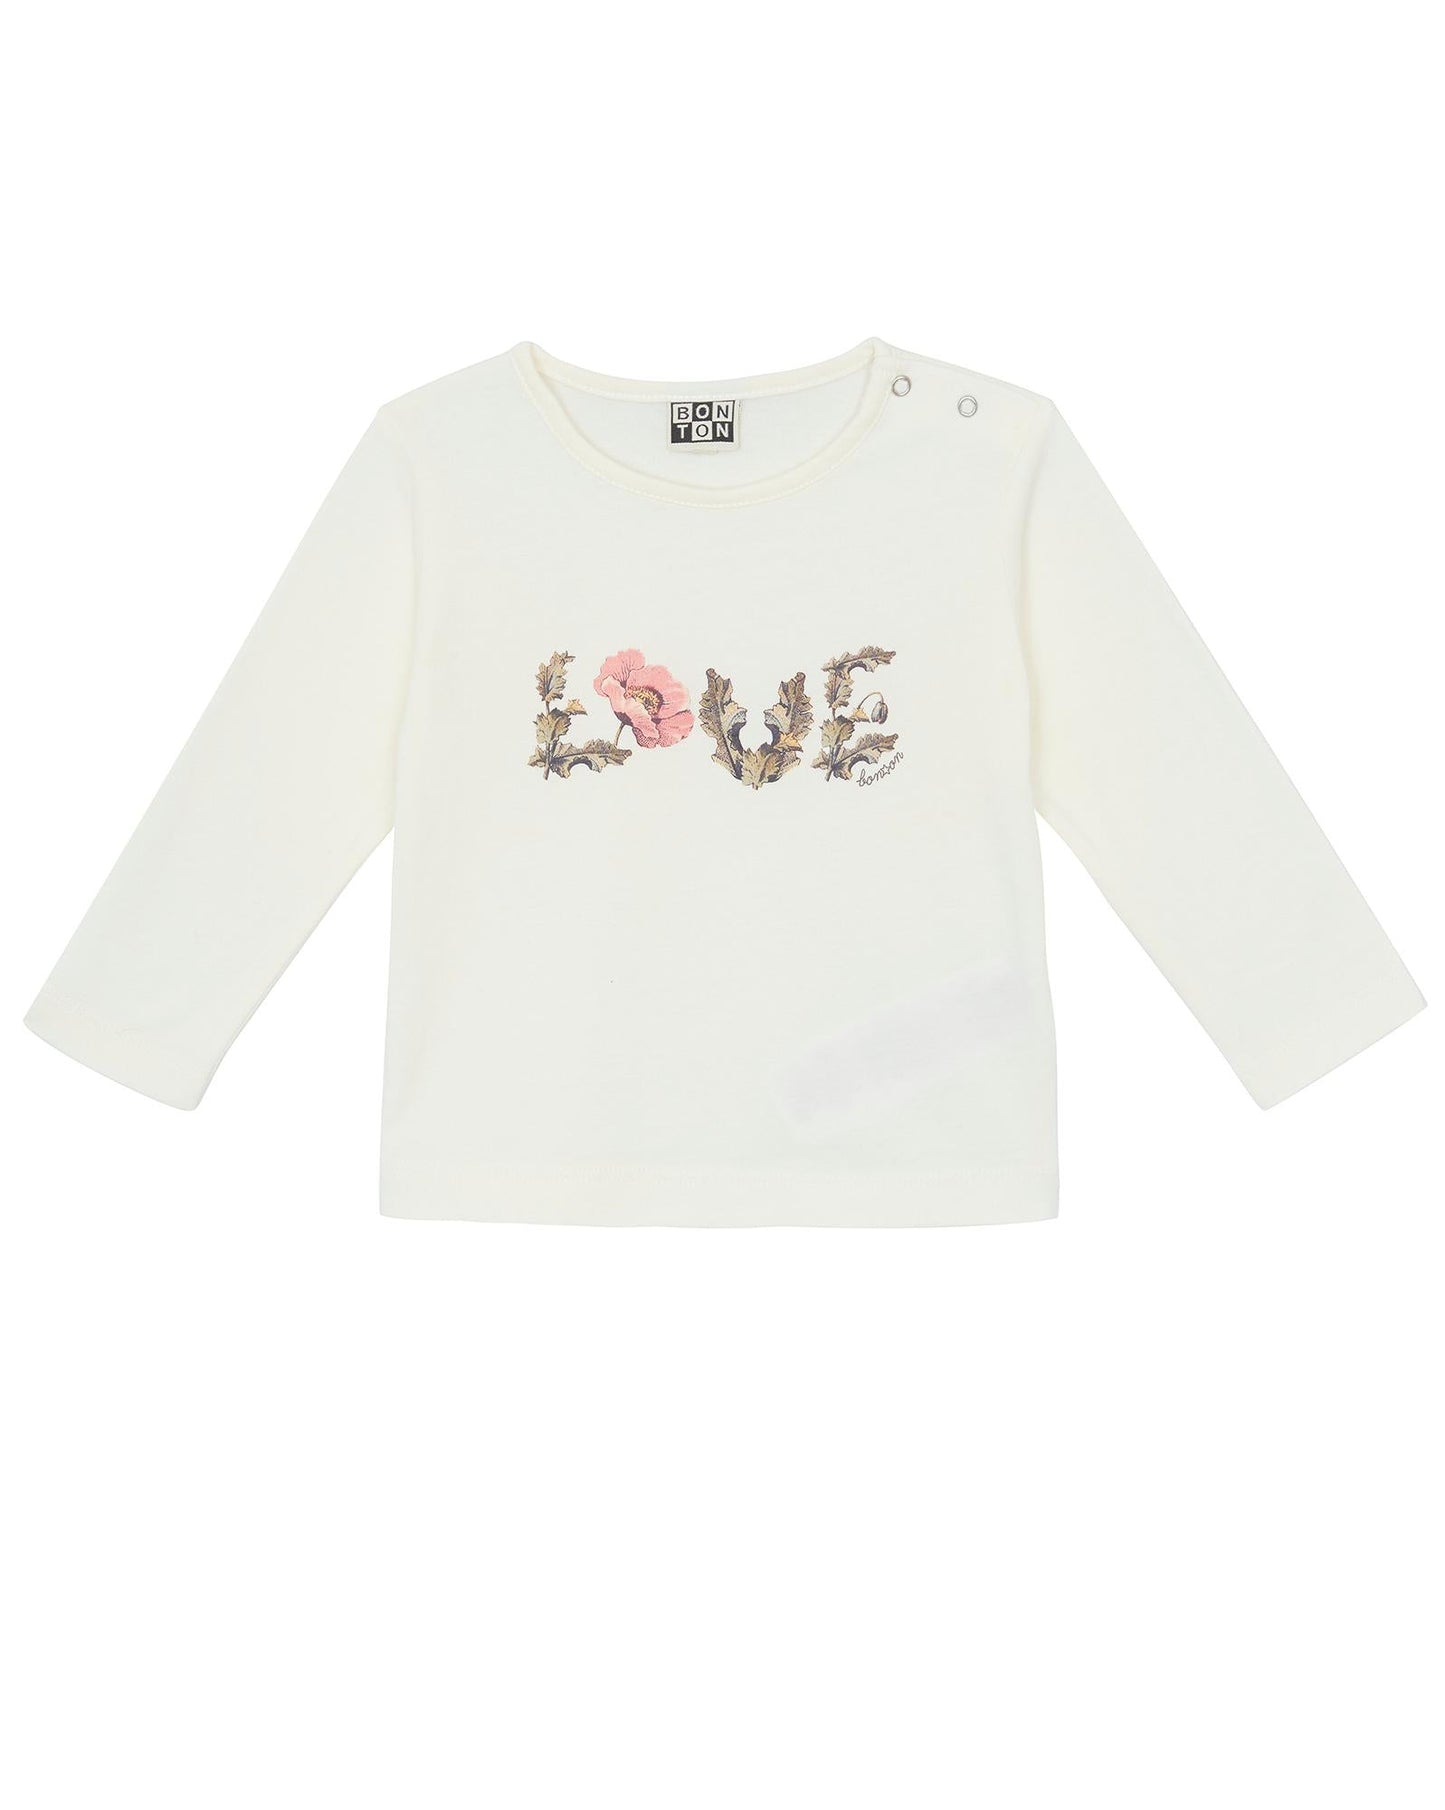 T-shirt Love Beige Baby ML 100% organic cotton